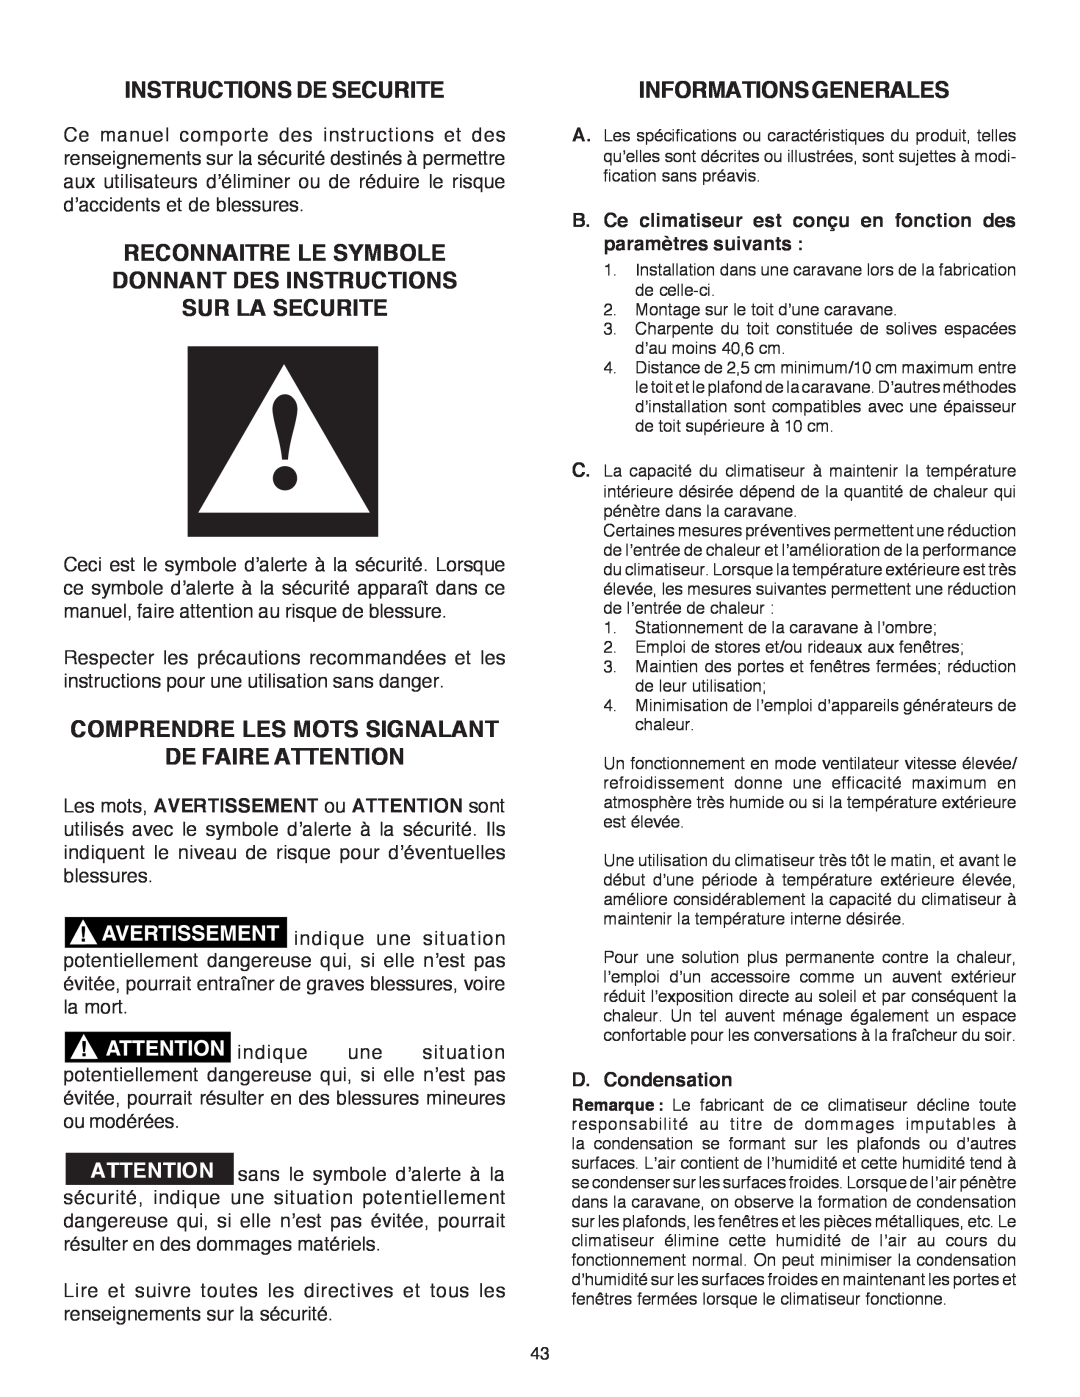 Dometic B3200 manual Instructions De Securite, Comprendre Les Mots Signalant De Faire Attention, Informationsgenerales 